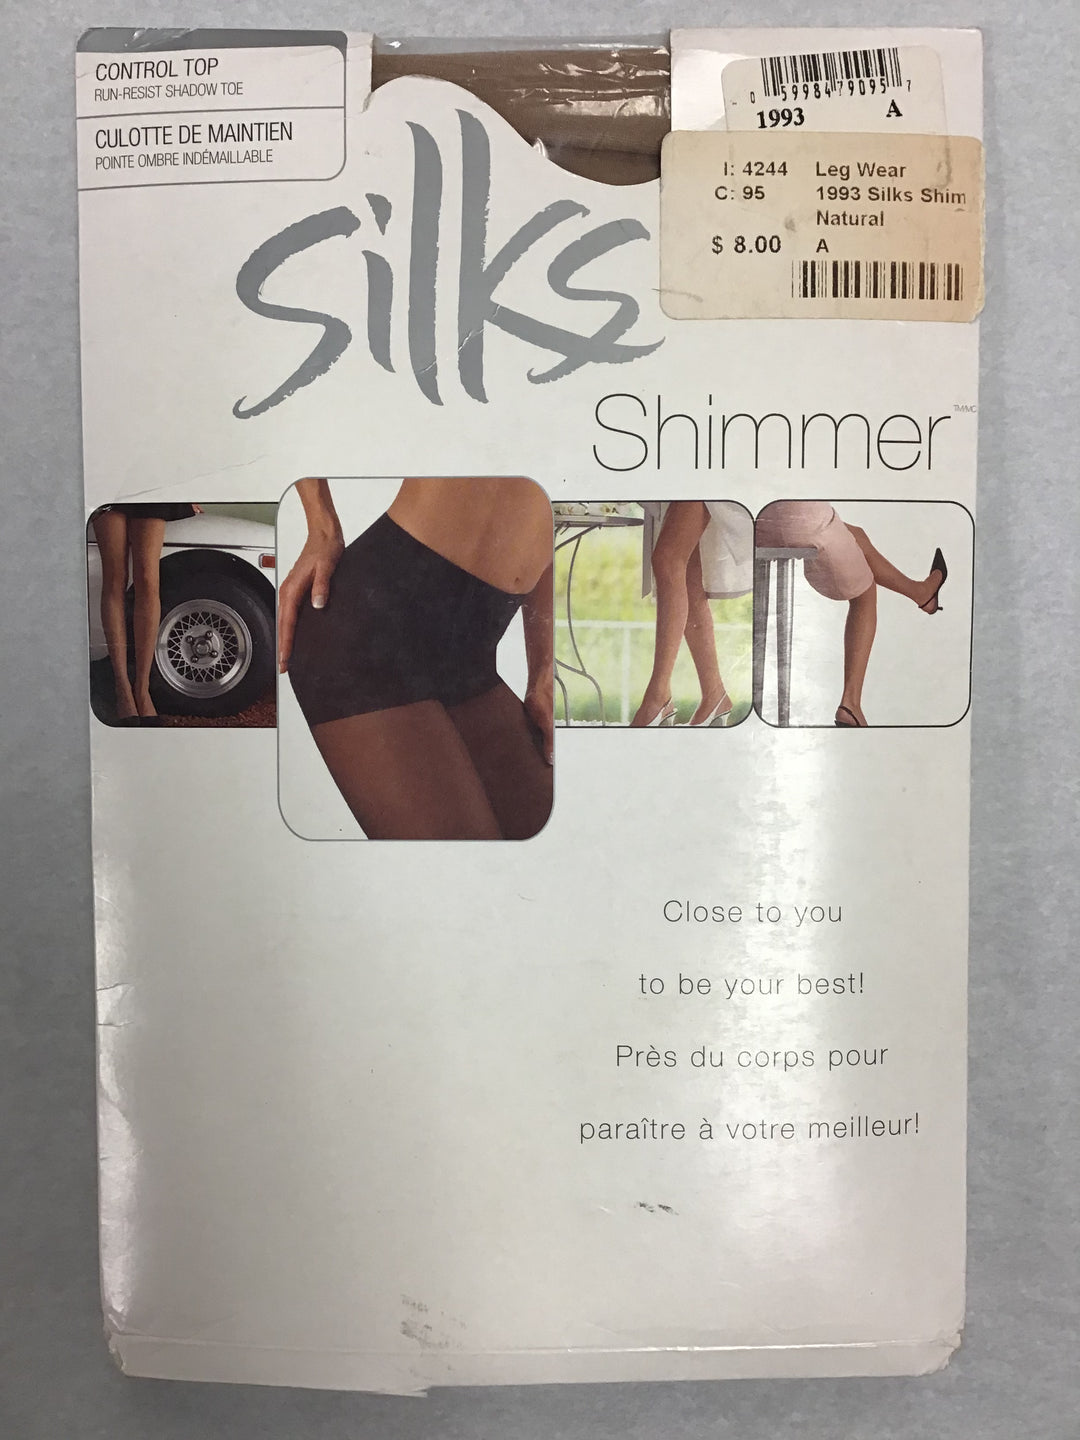 Silks- Control Top Pantyhose – Sheer Essentials Lingerie & Swimwear